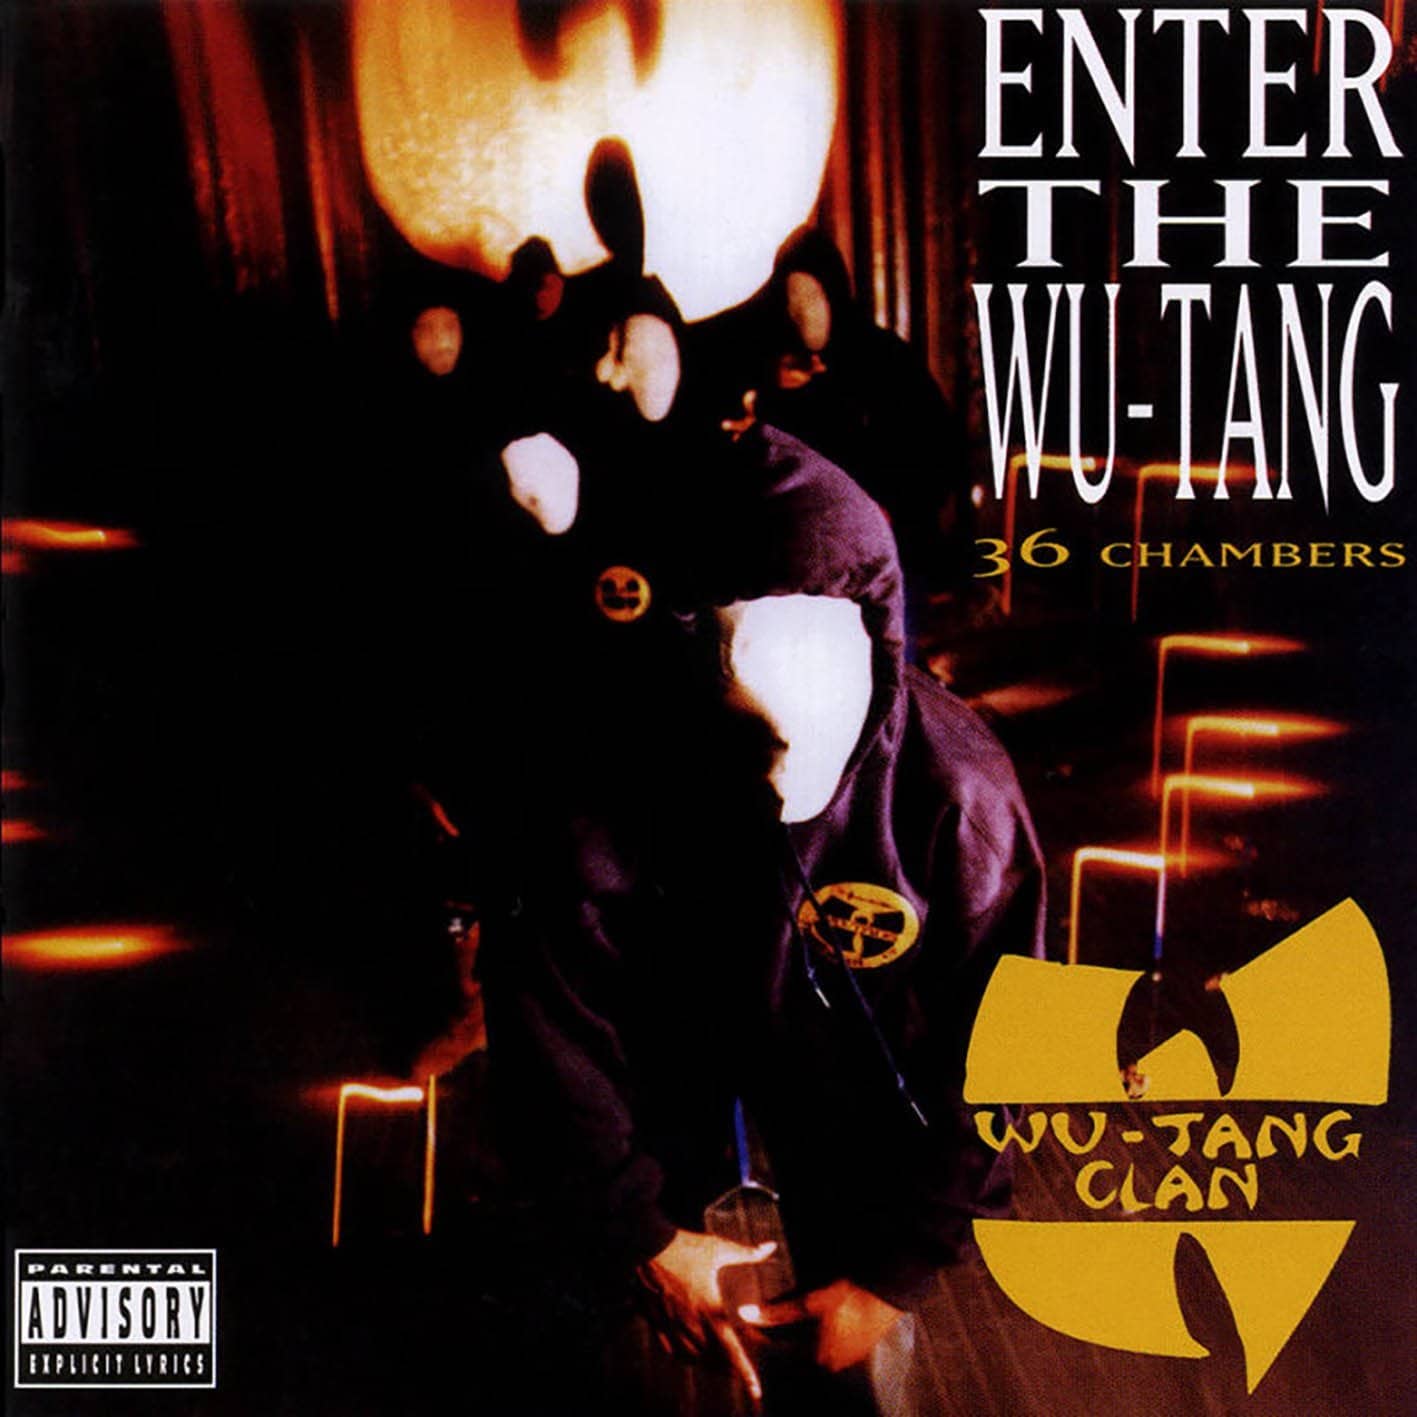 Wu-Tang-Clan-Enter-the-Wu-Tang-36-Chambers-vinyl-record-album-front